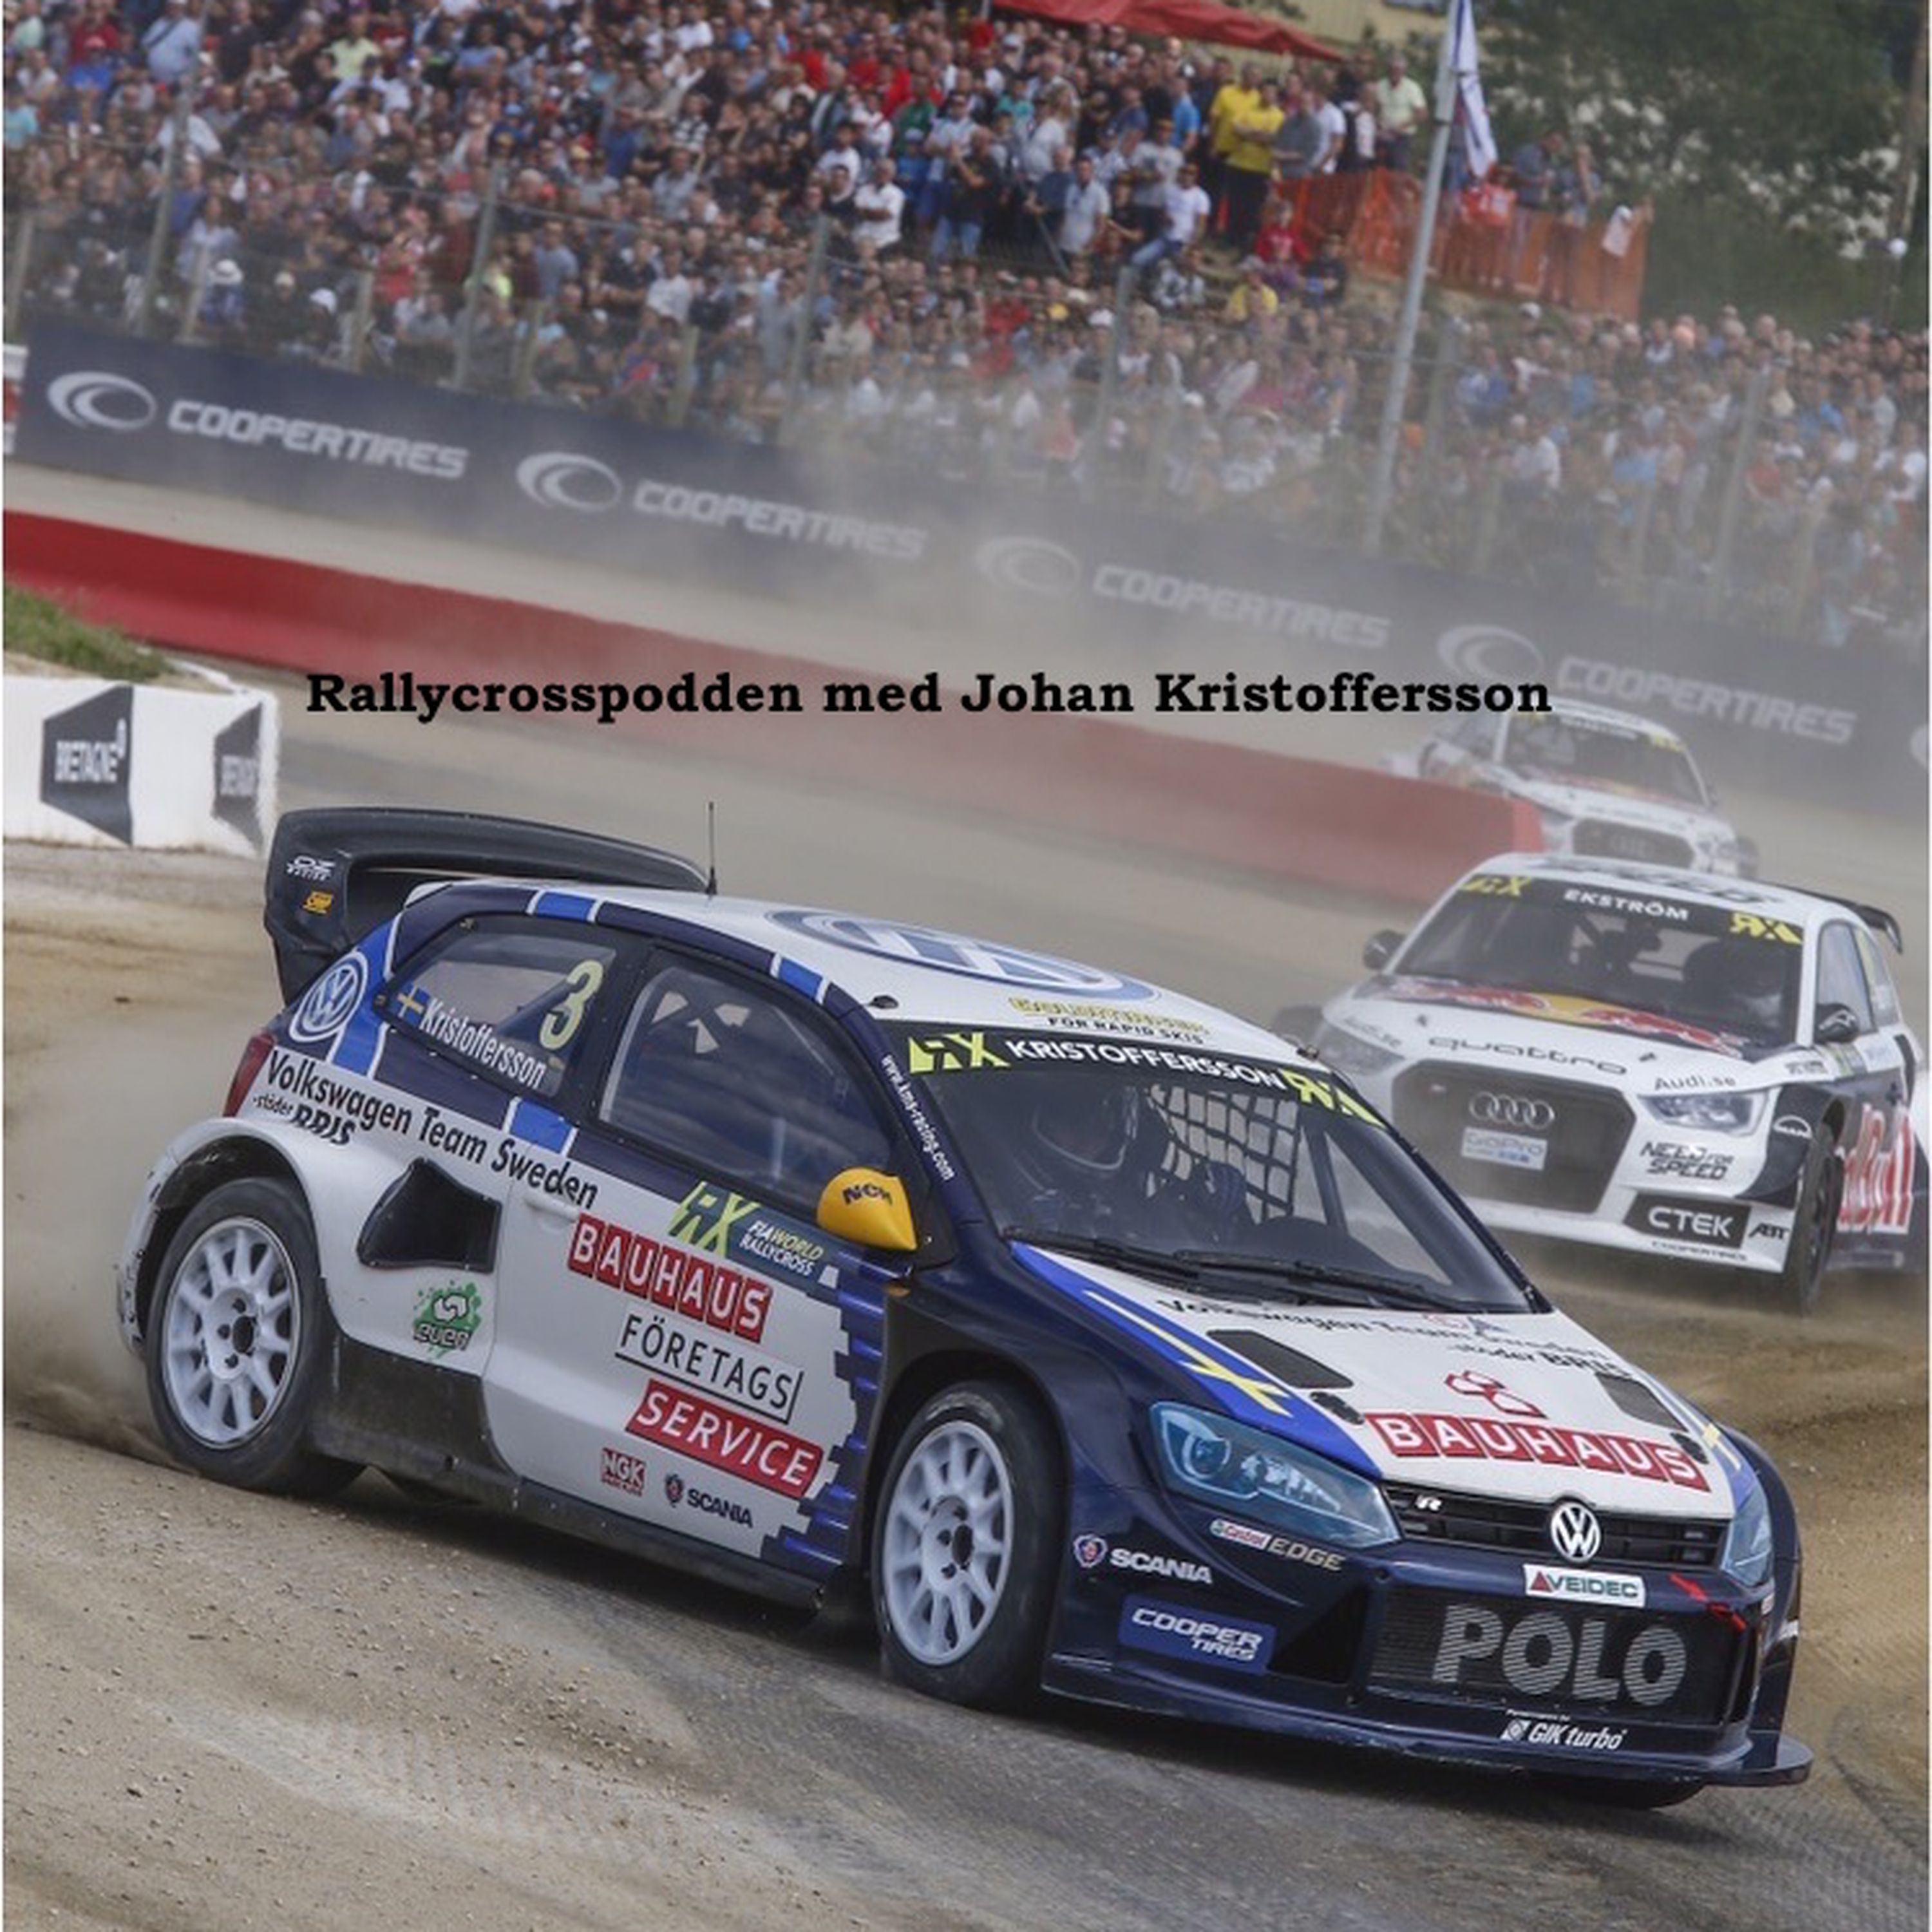 cover art for 4. Bauhaus Rallycrosspodd med Johan Kristoffersson - Back to Hell